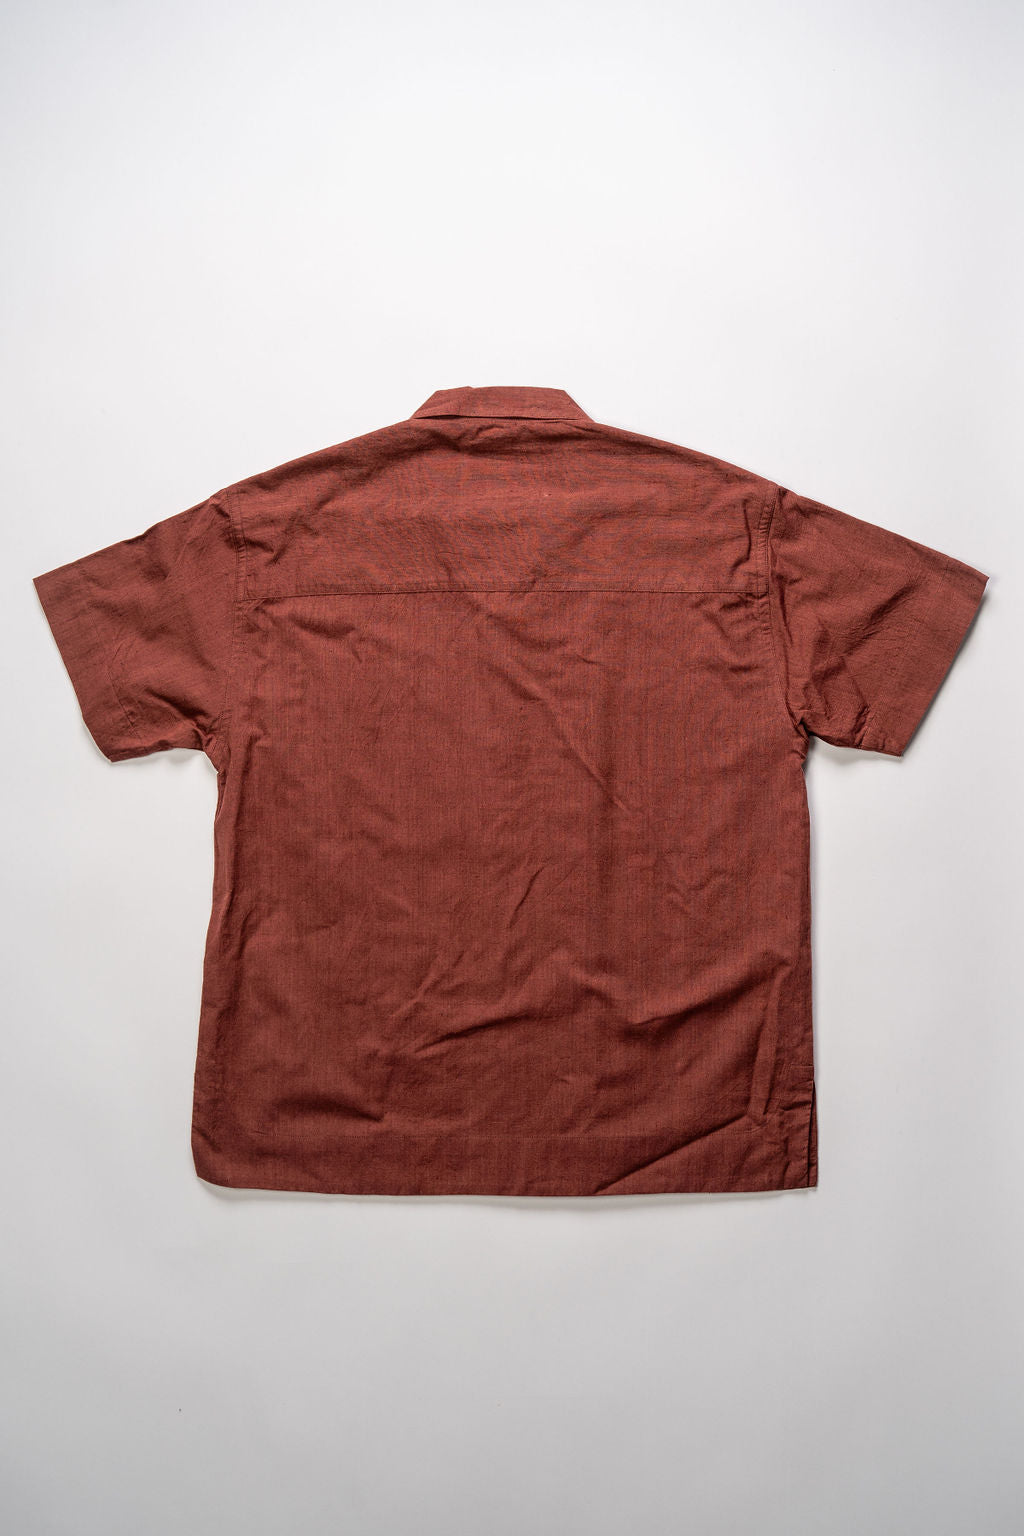 Indi + Ash S/S Lake Camp Shirt - Cutch Brick